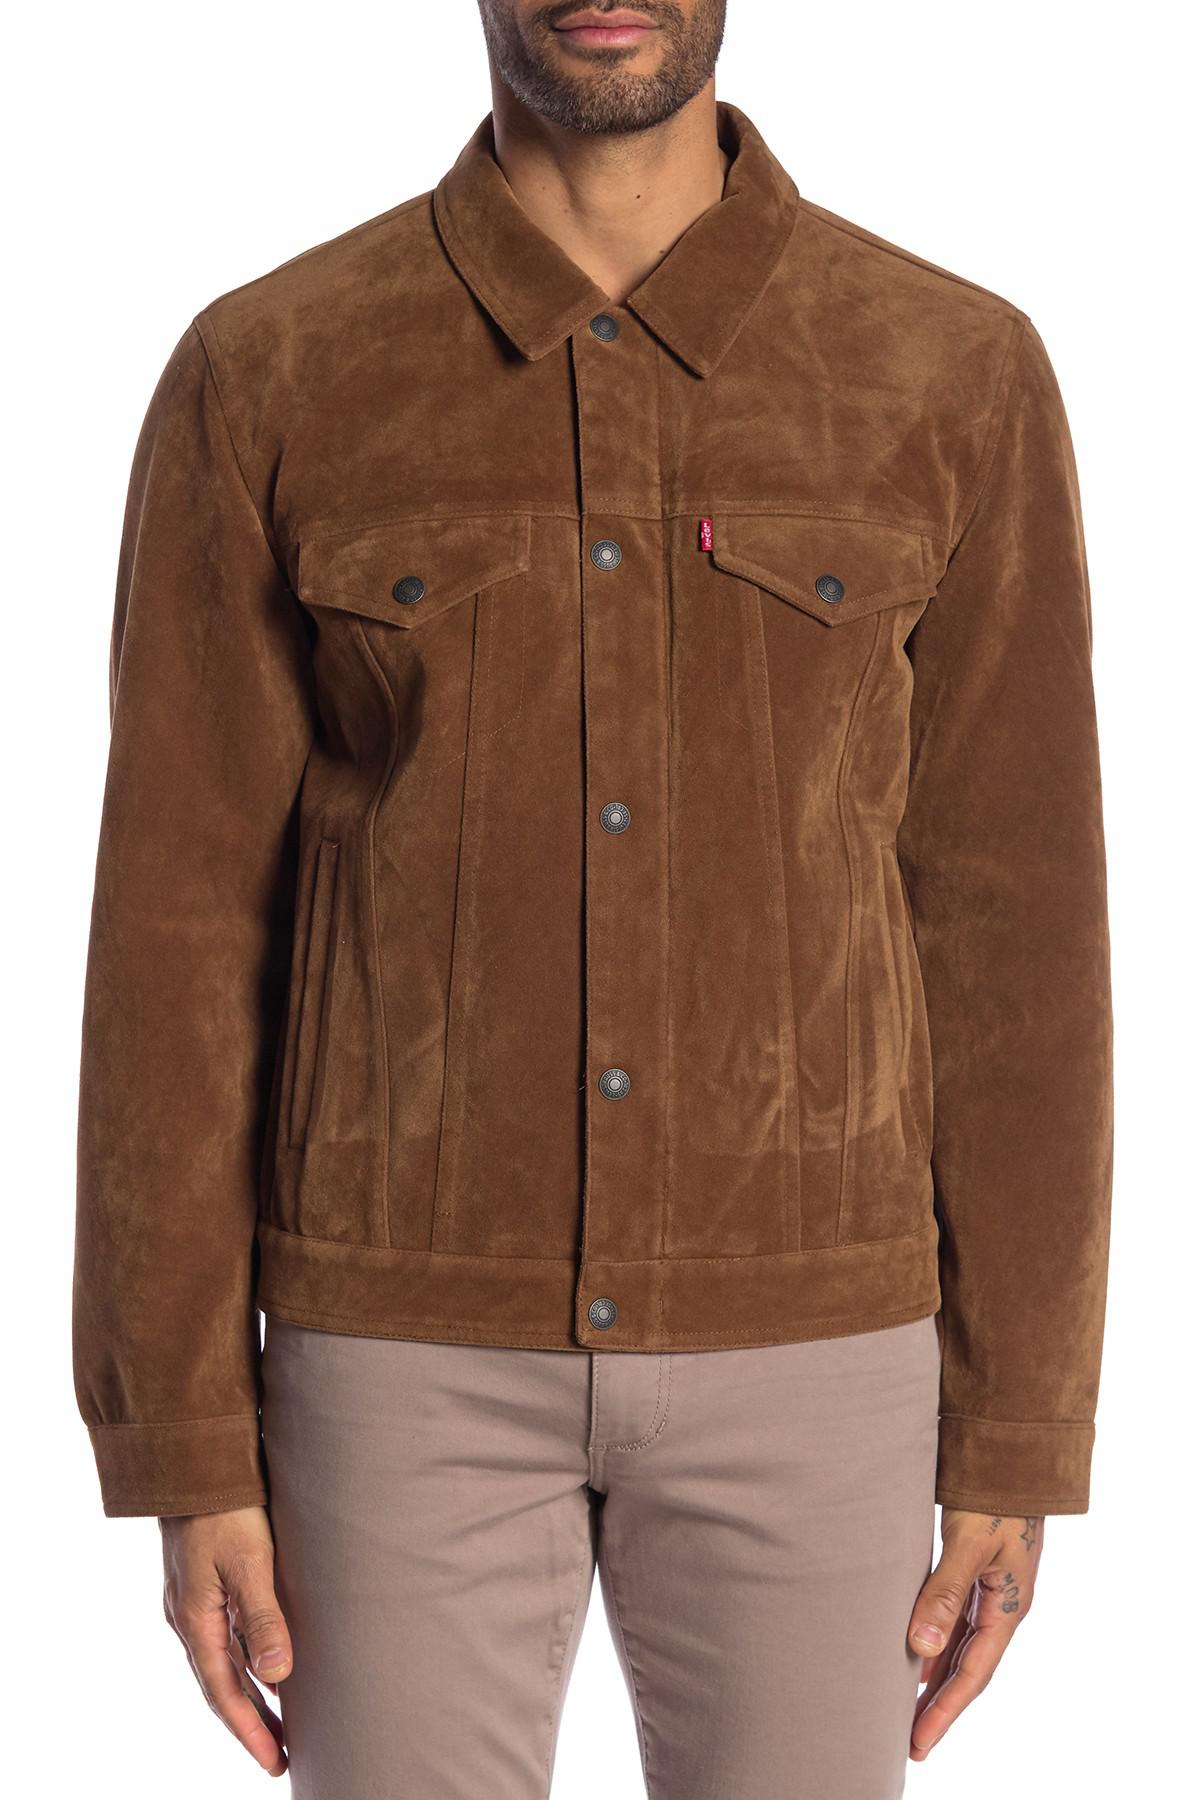 Levi's Faux Suede Classic Trucker Jacket in Cognac (Brown) for Men - Lyst